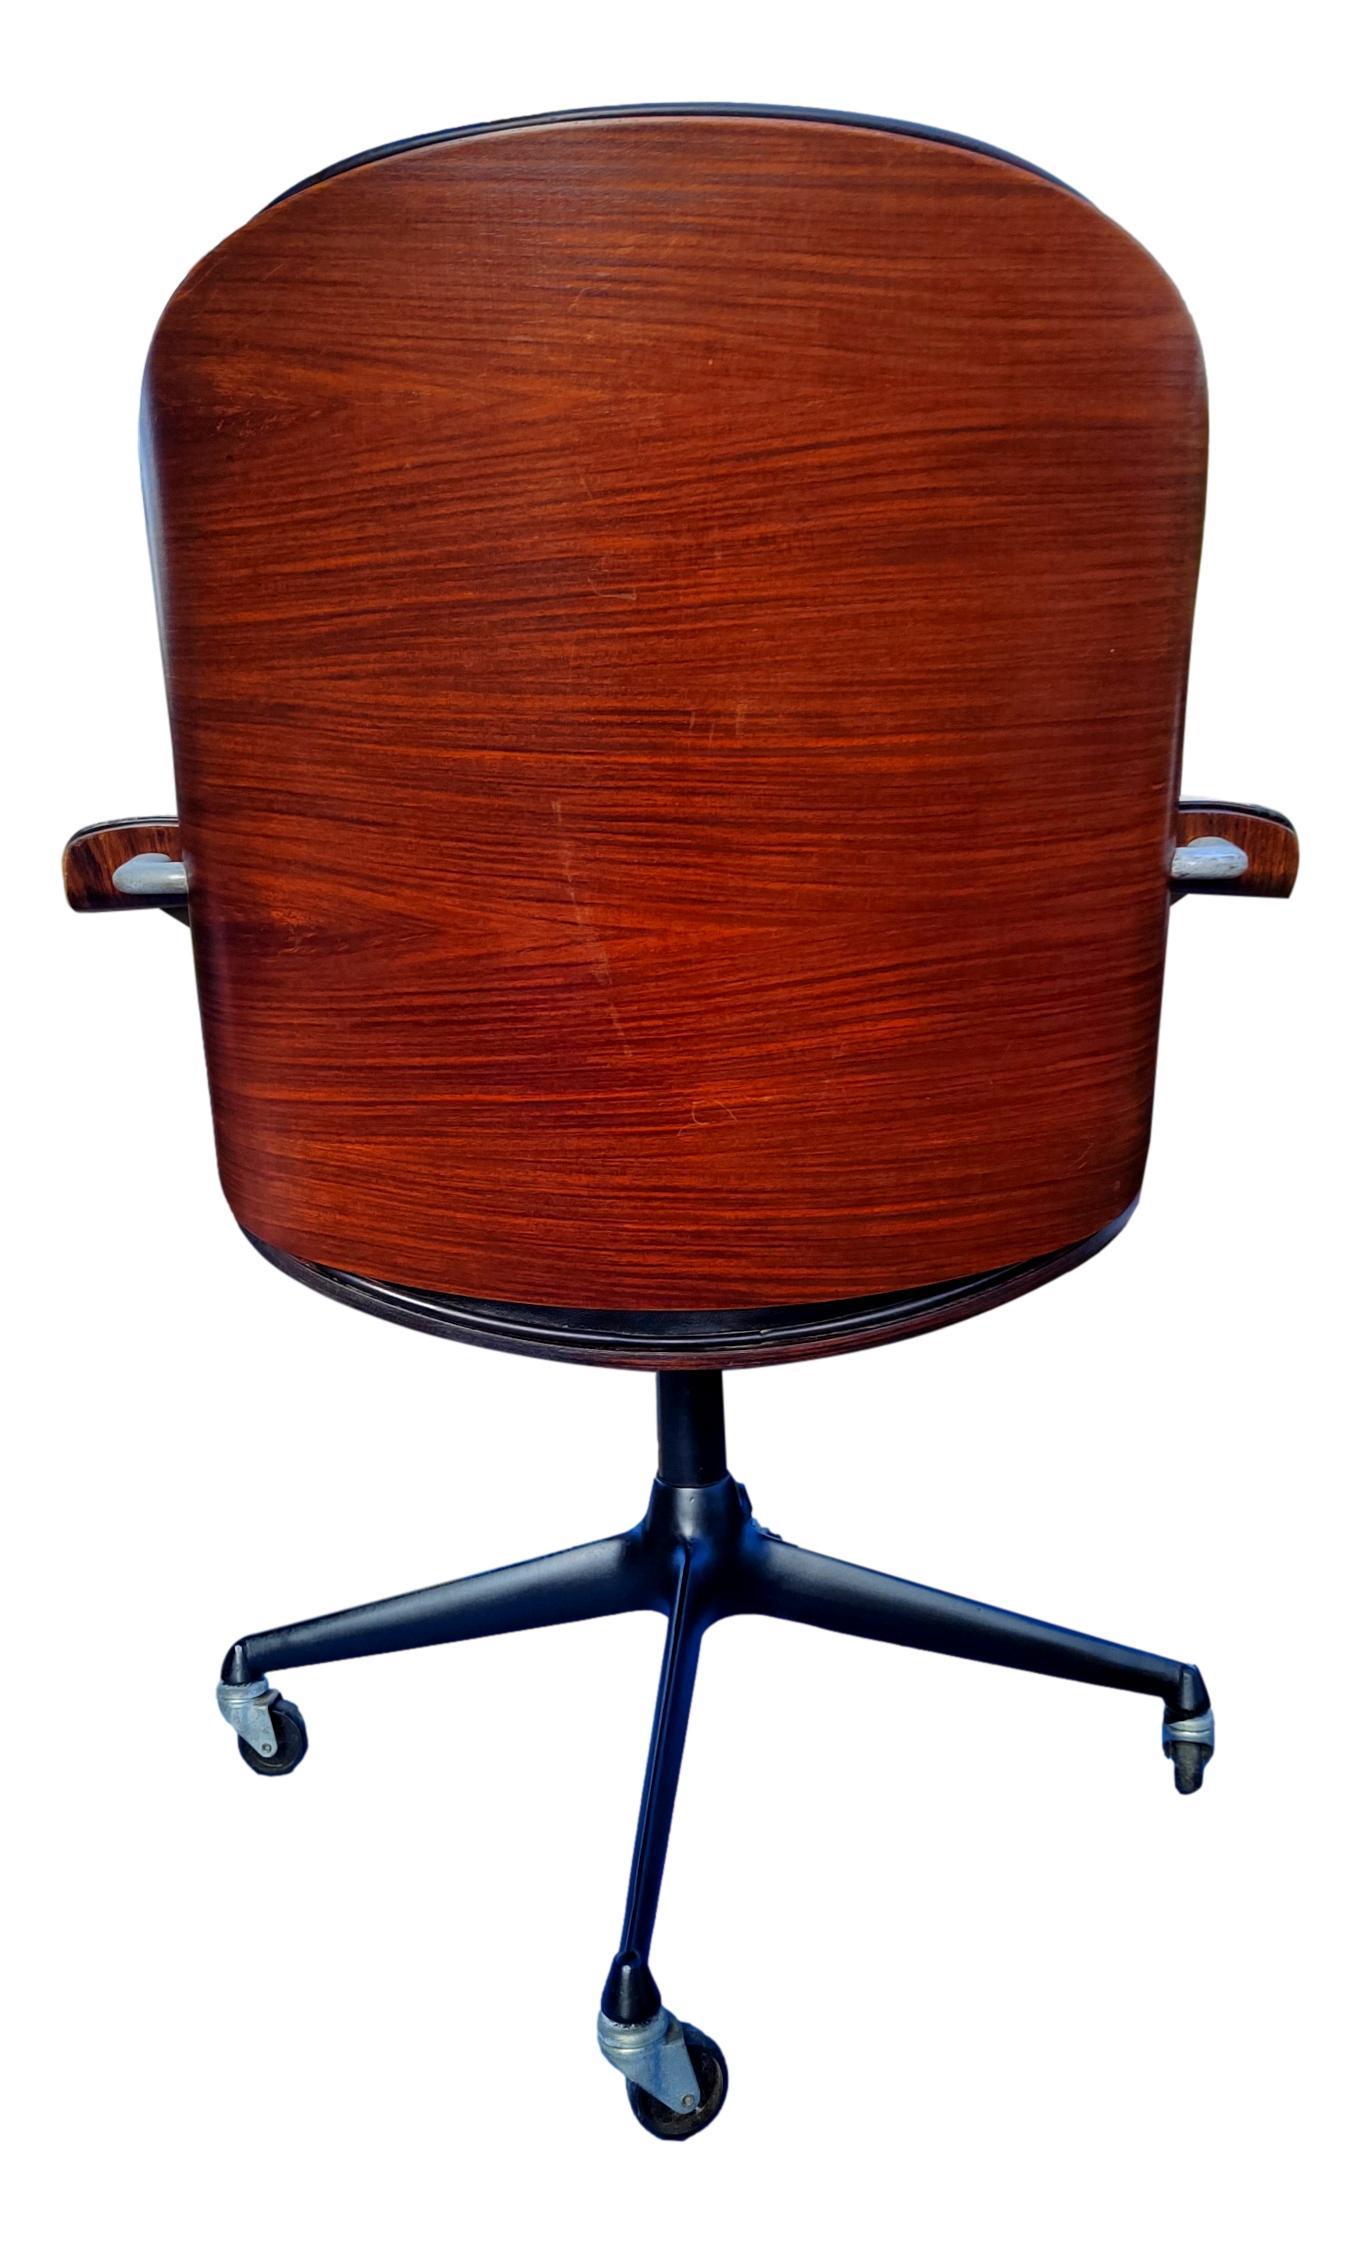 Mid-20th Century Desk Office Chair Design Ico Parisi for Mim Roma 1960